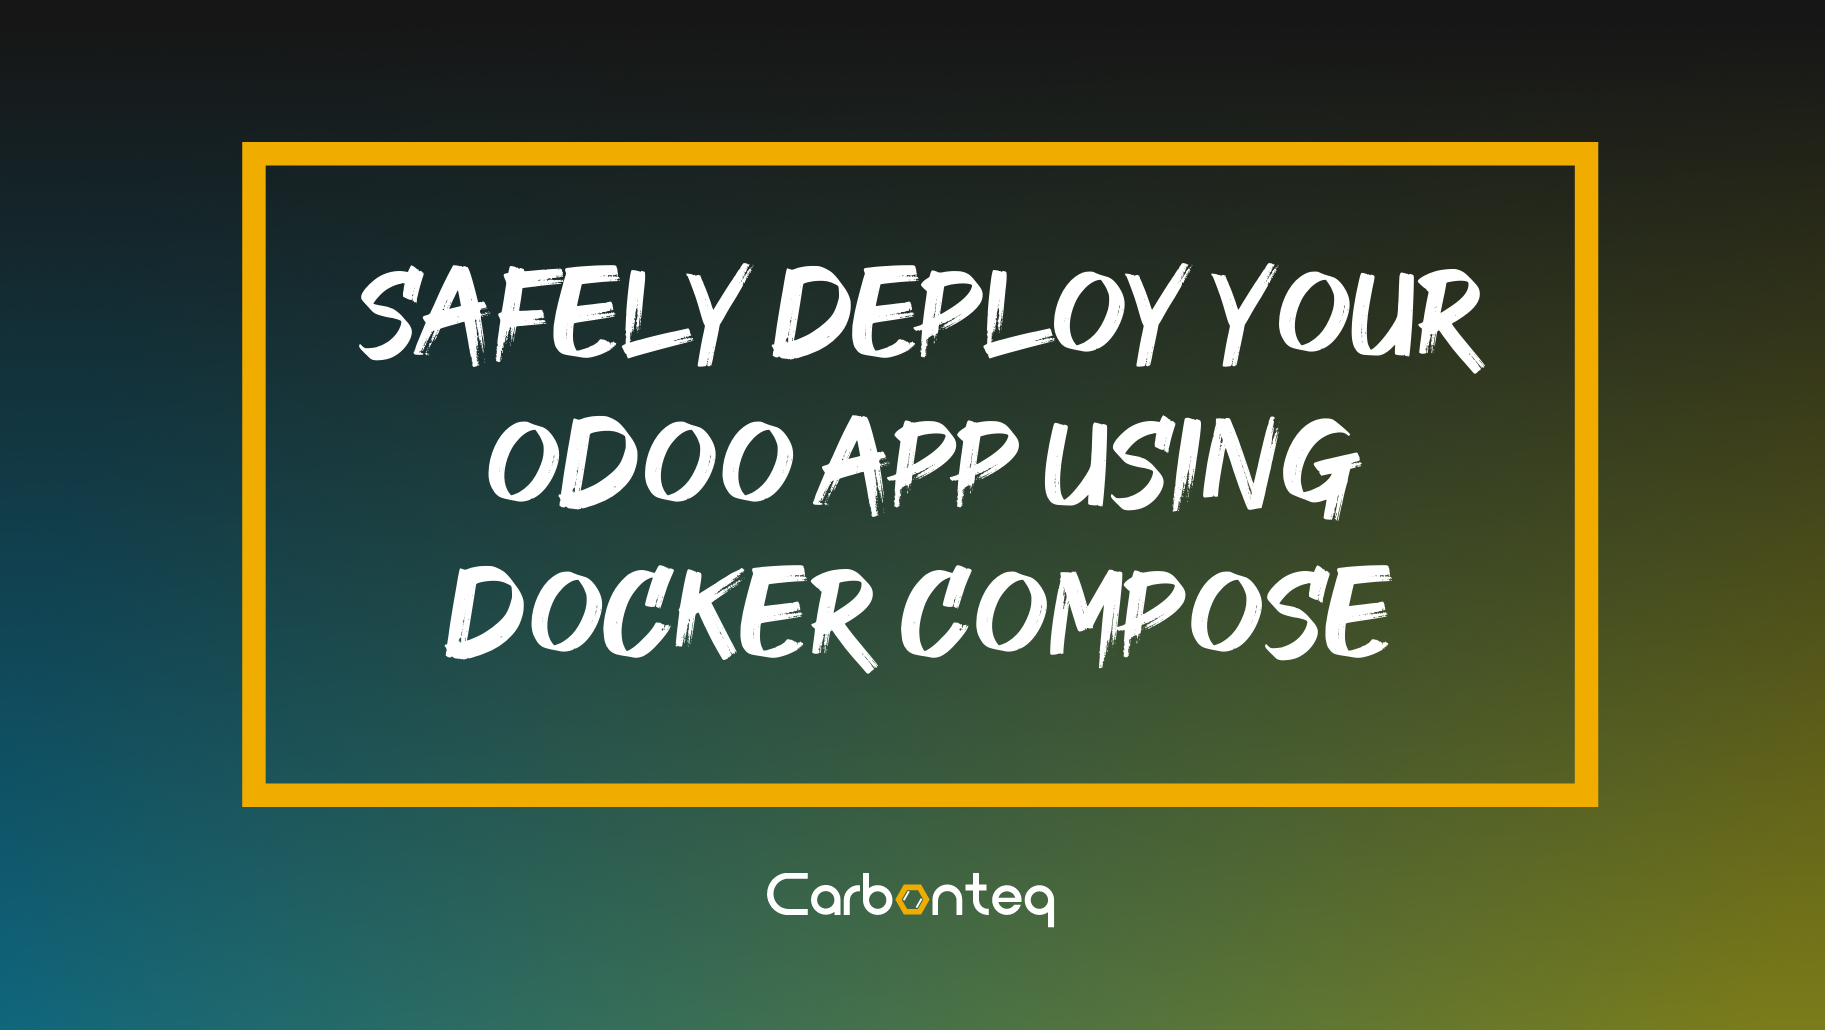 Odoo Docker Setup - Docker Compose